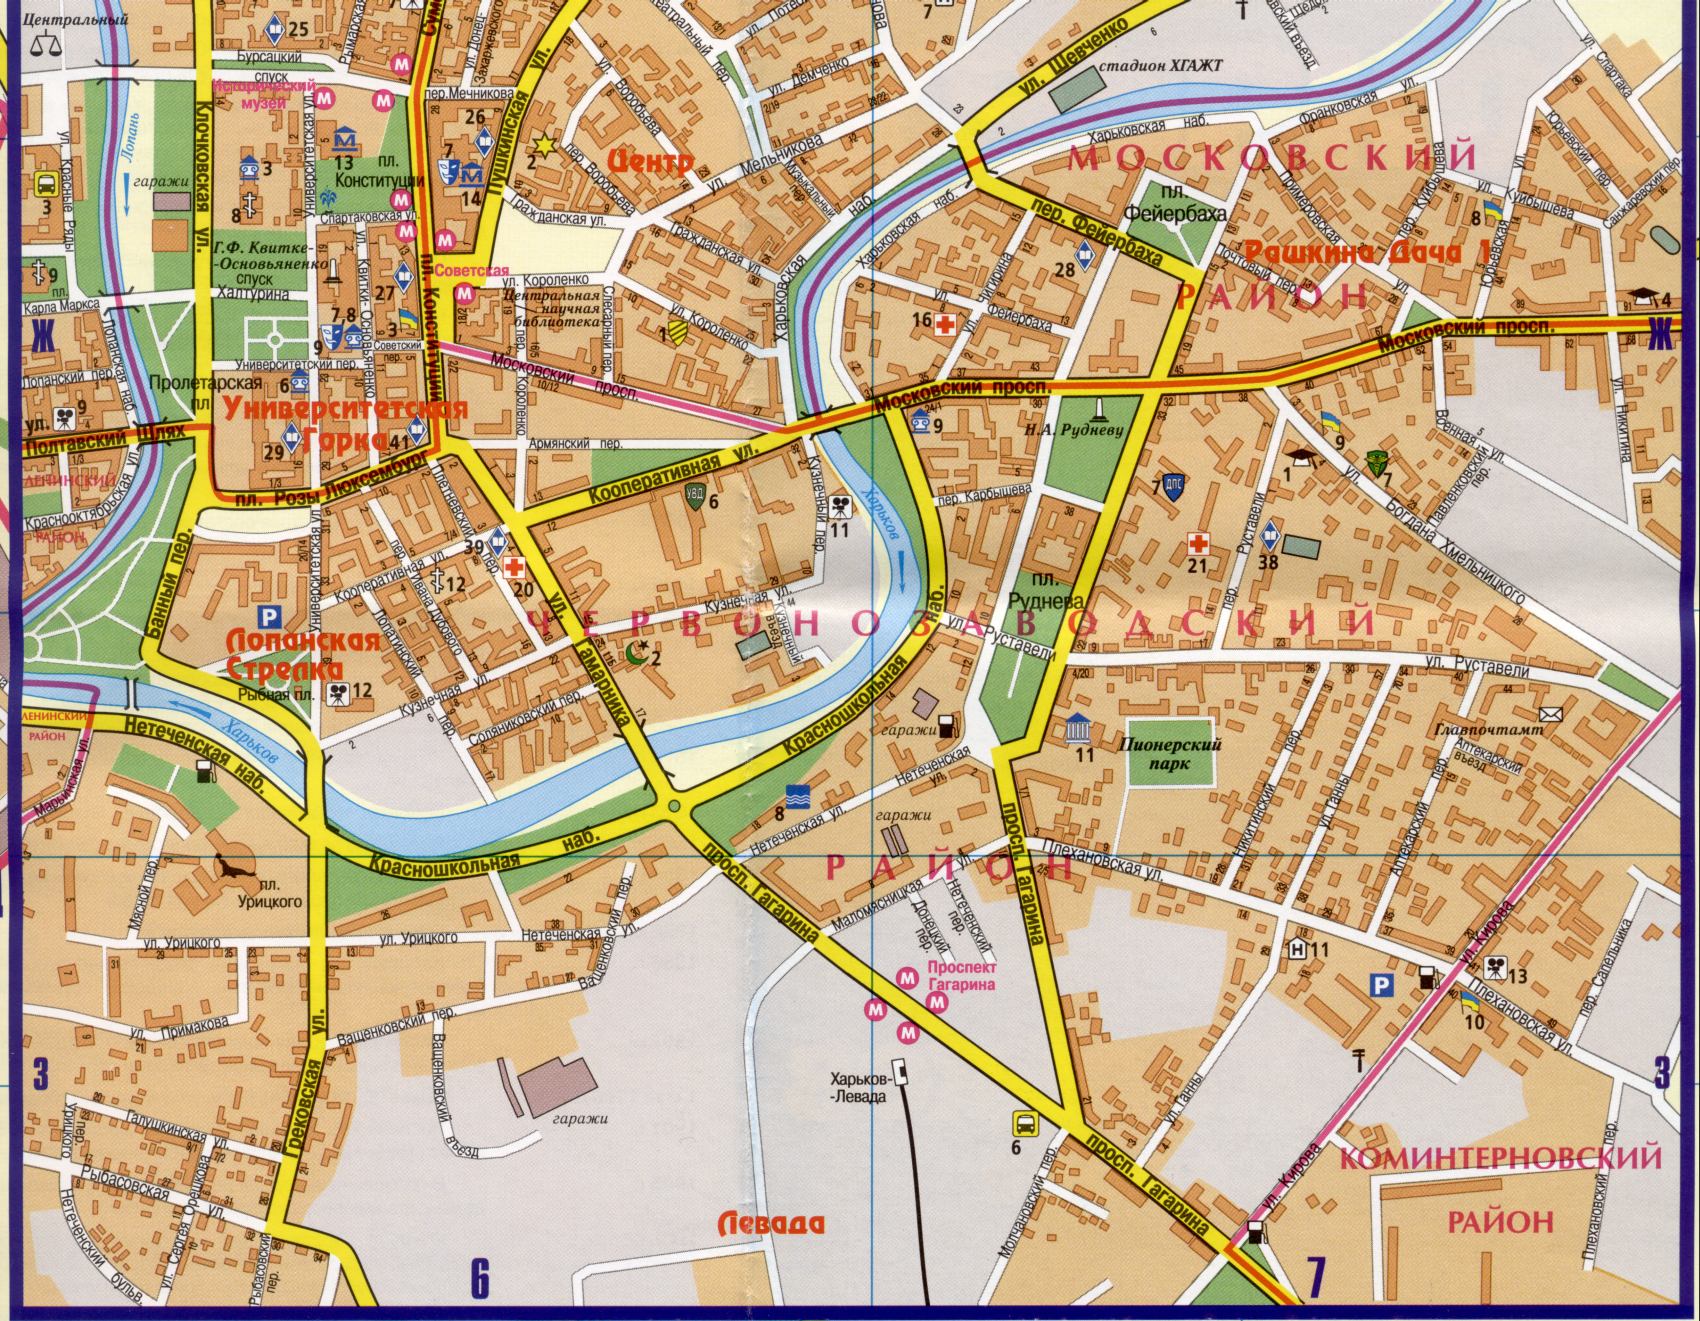 Kharkov map - detailed map of the city center of Kharkov, A1